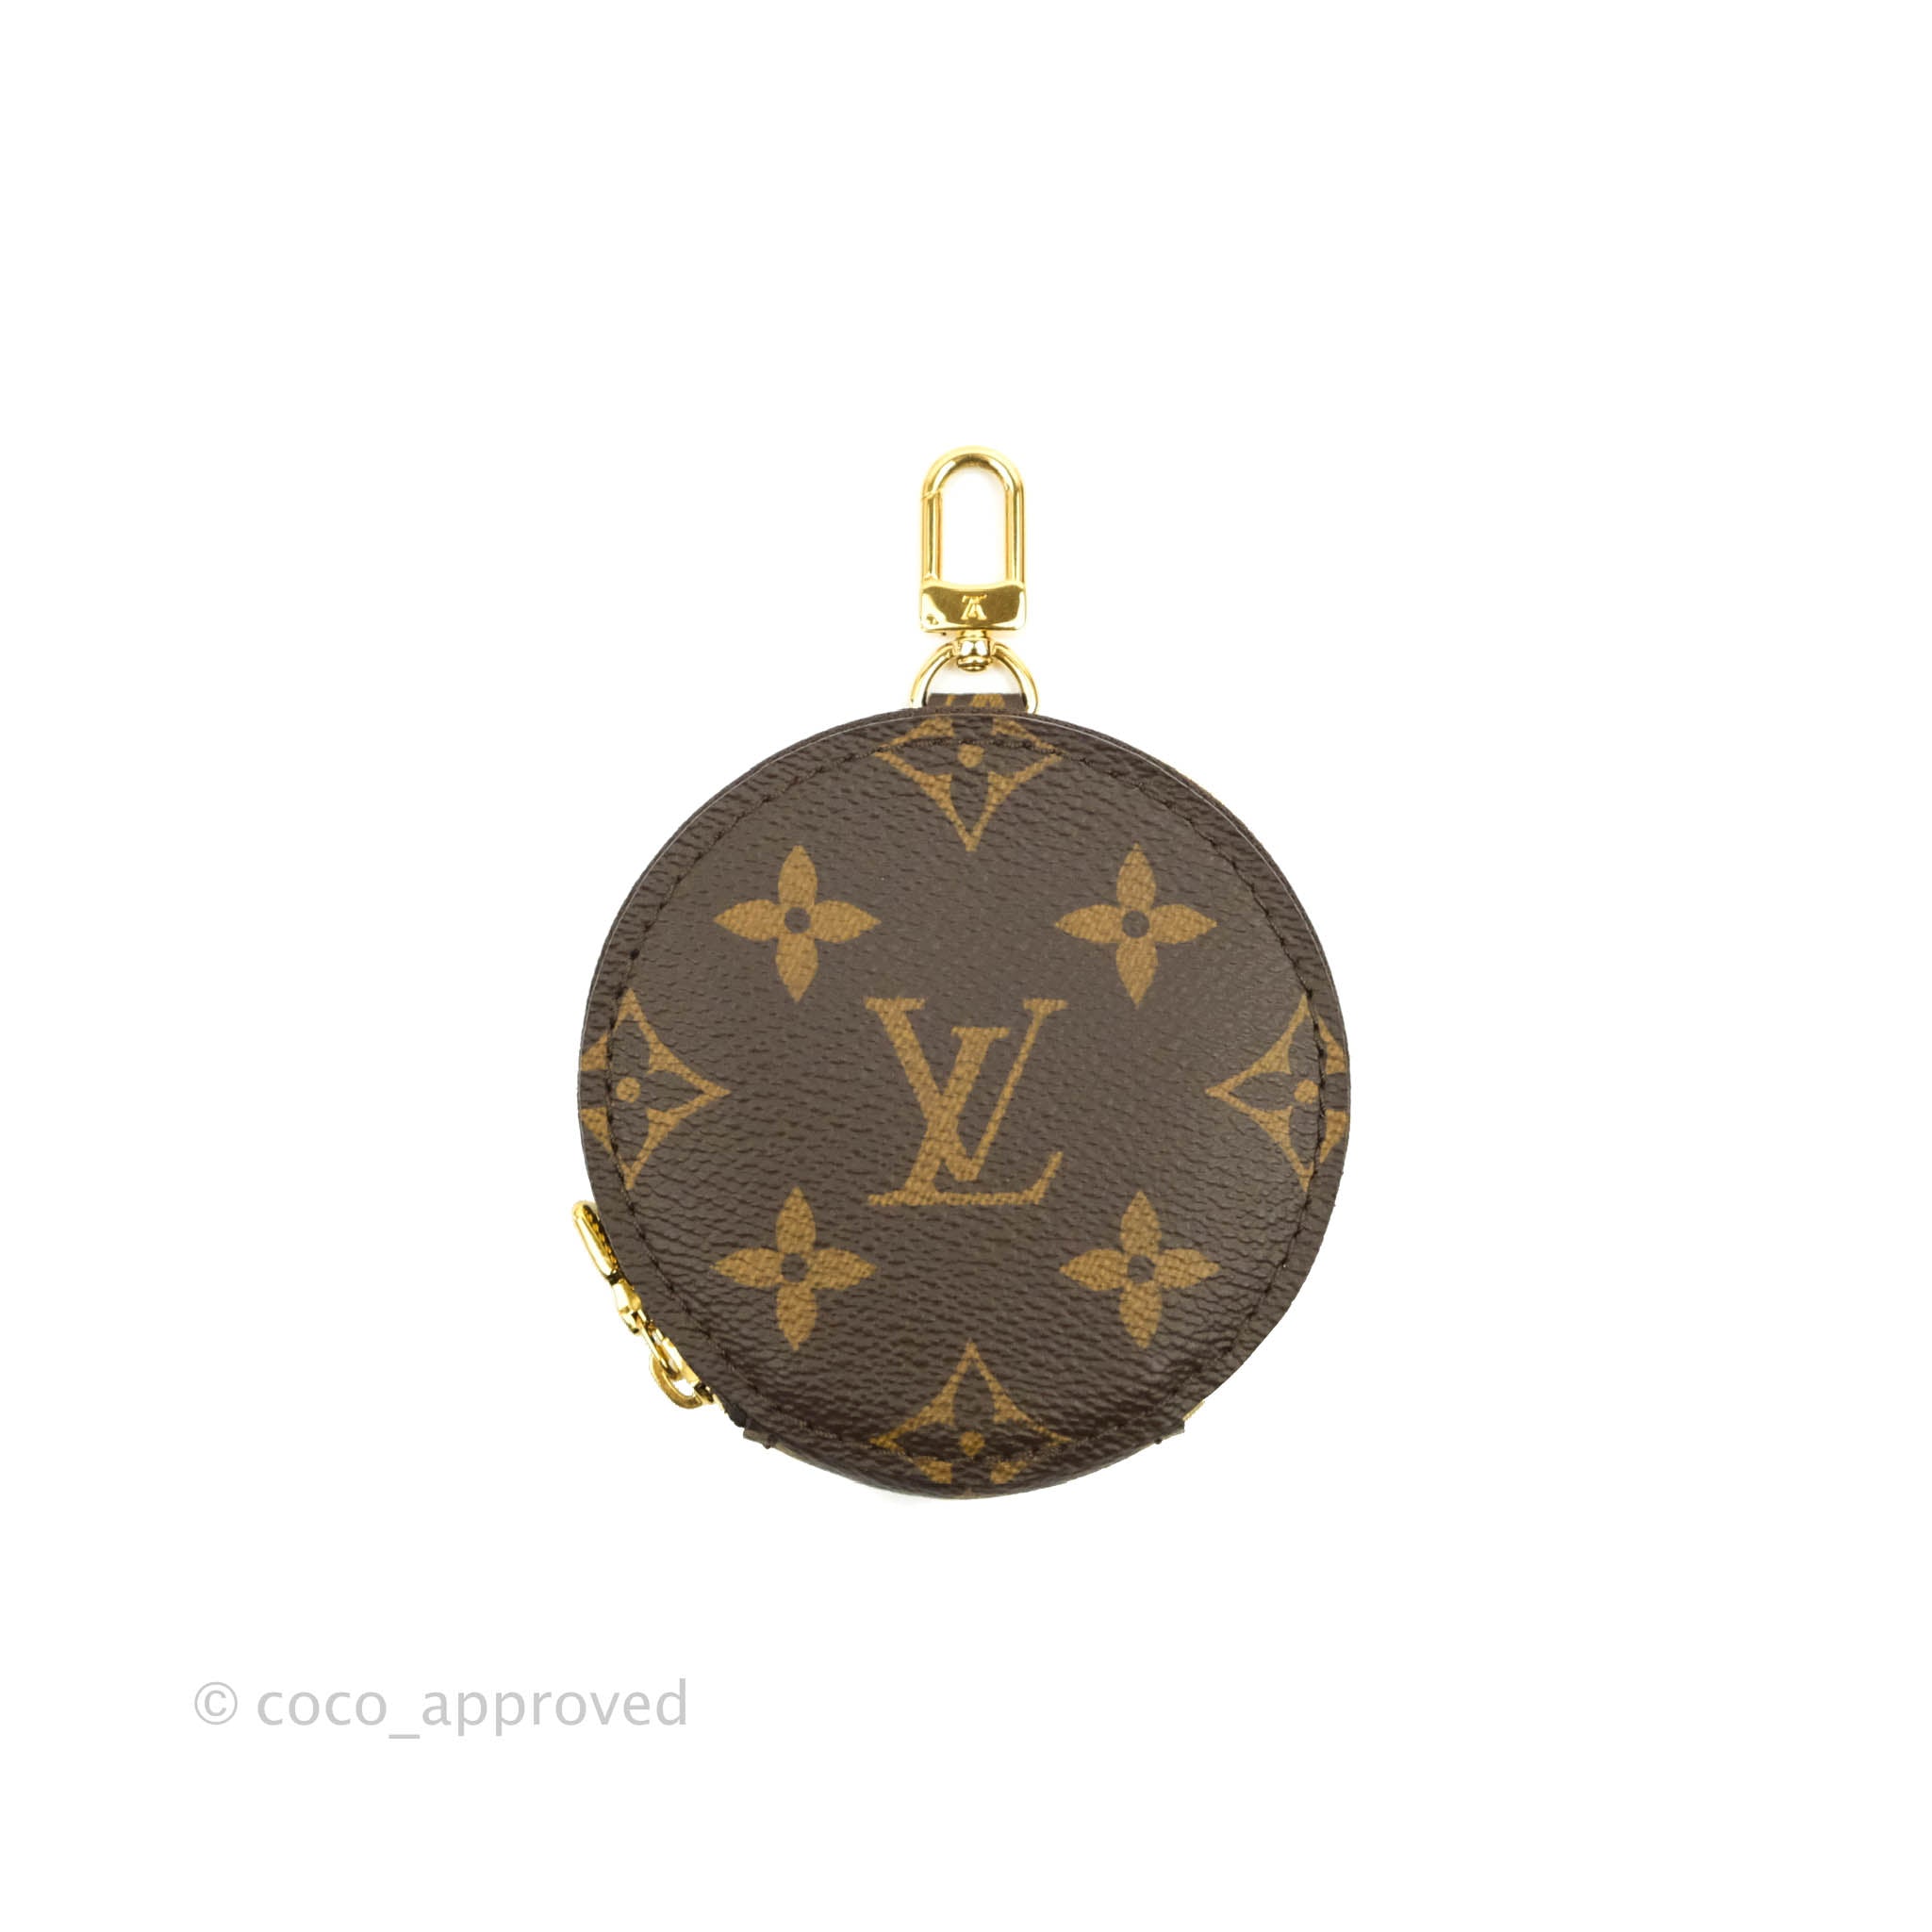 Baggy cloth handbag Louis Vuitton Black in Cloth - 26168873